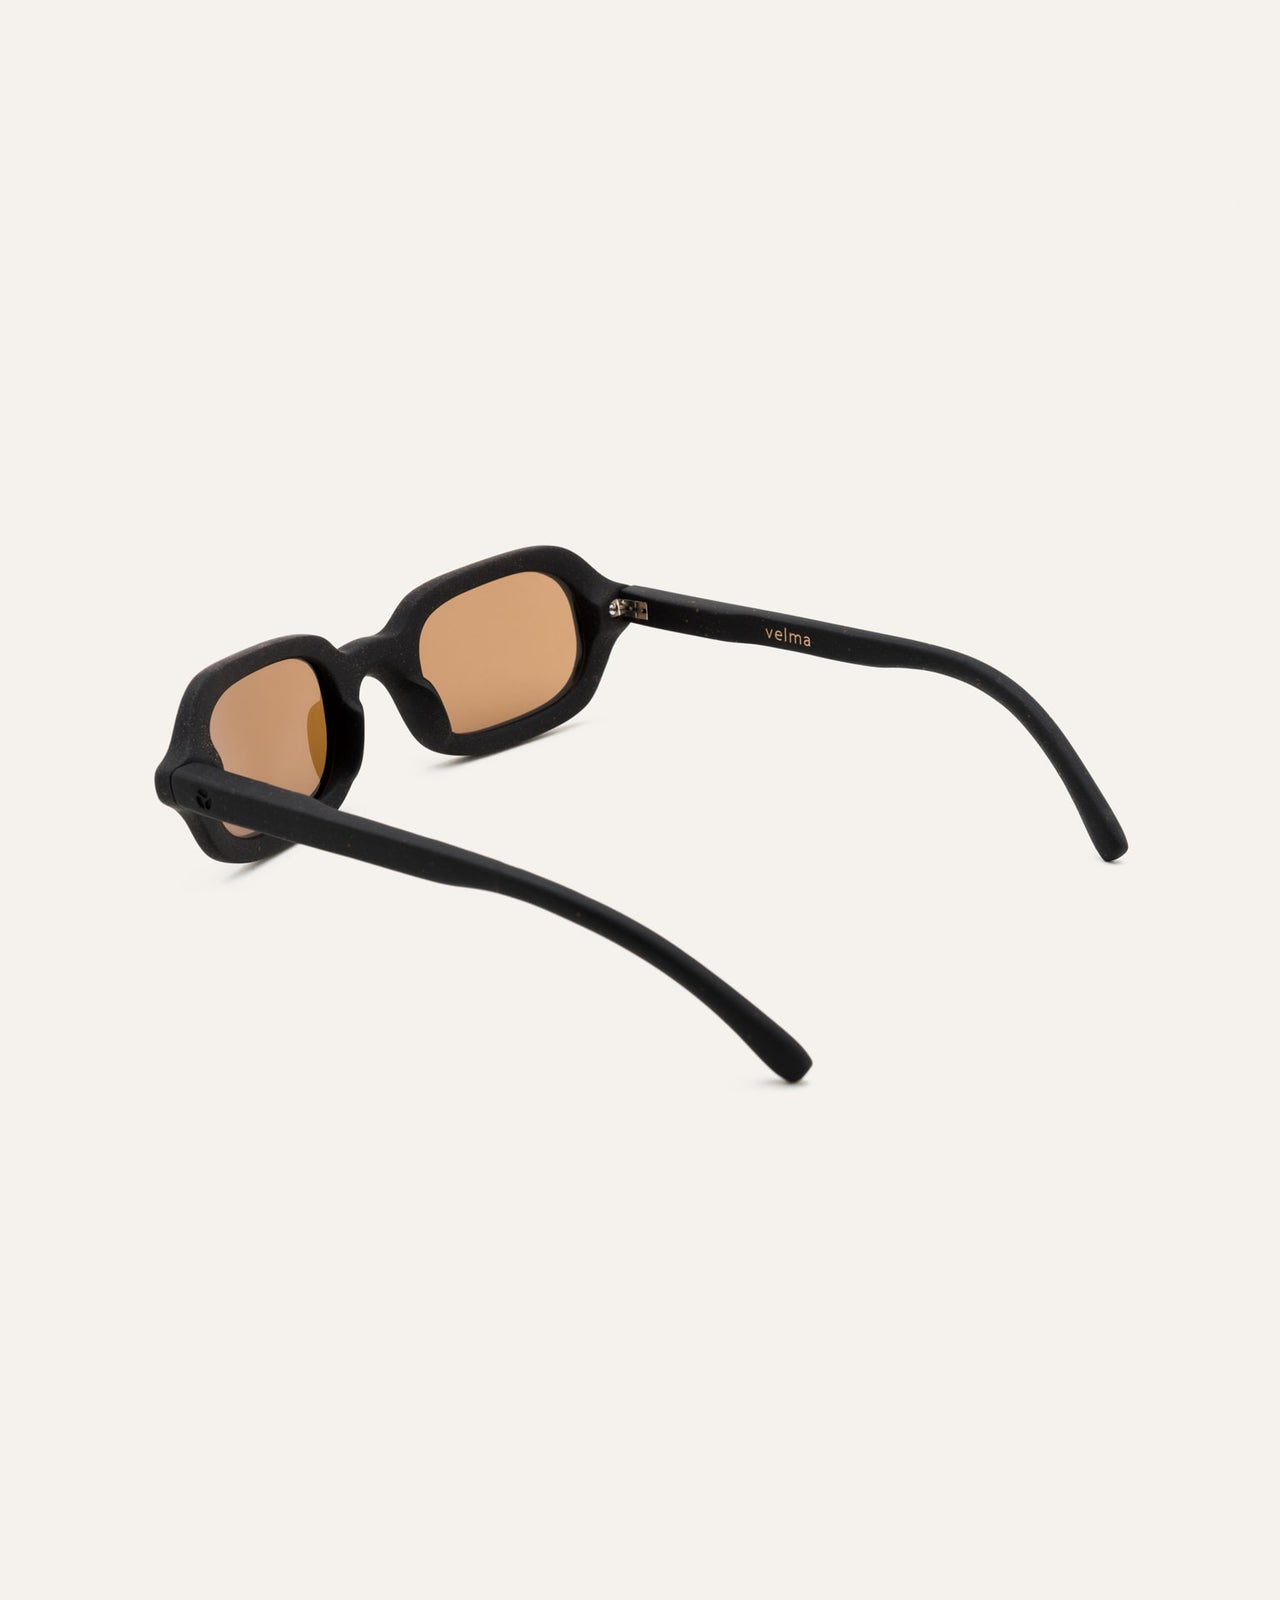 Buy Ray-Ban Ray-Ban Sunglasses | Black Sunglasses ( 0Rb3025 | Pilot | Black  Frame | Brown Lens ) Sunglasses Online.